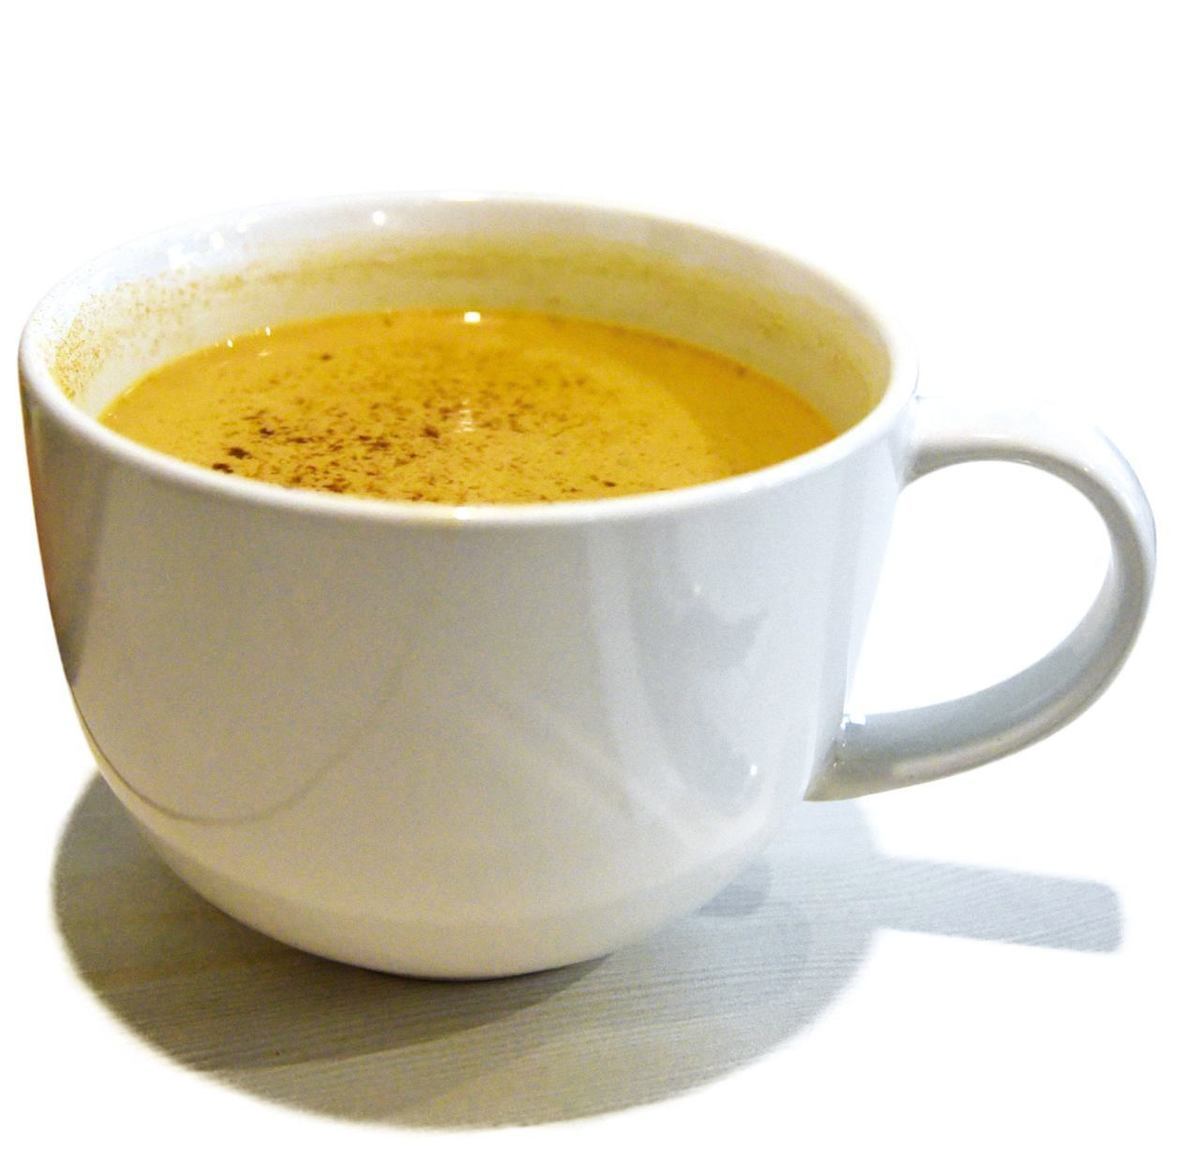 BULLETPROOF CHAGA Coffee ，白華茸咖啡，白樺茸是世界上鹼性最大的天然食物，也是自然界中提升免疫力及具有抗癌特性最好的食物。它能平衡咖啡的酸性成份。BULLETPROOF 加入天然食草牛所產的牛油和亞麻籽油，容易消化，對燃燒脂肪很有效，而且味道非常香滑。（英格／大紀元）